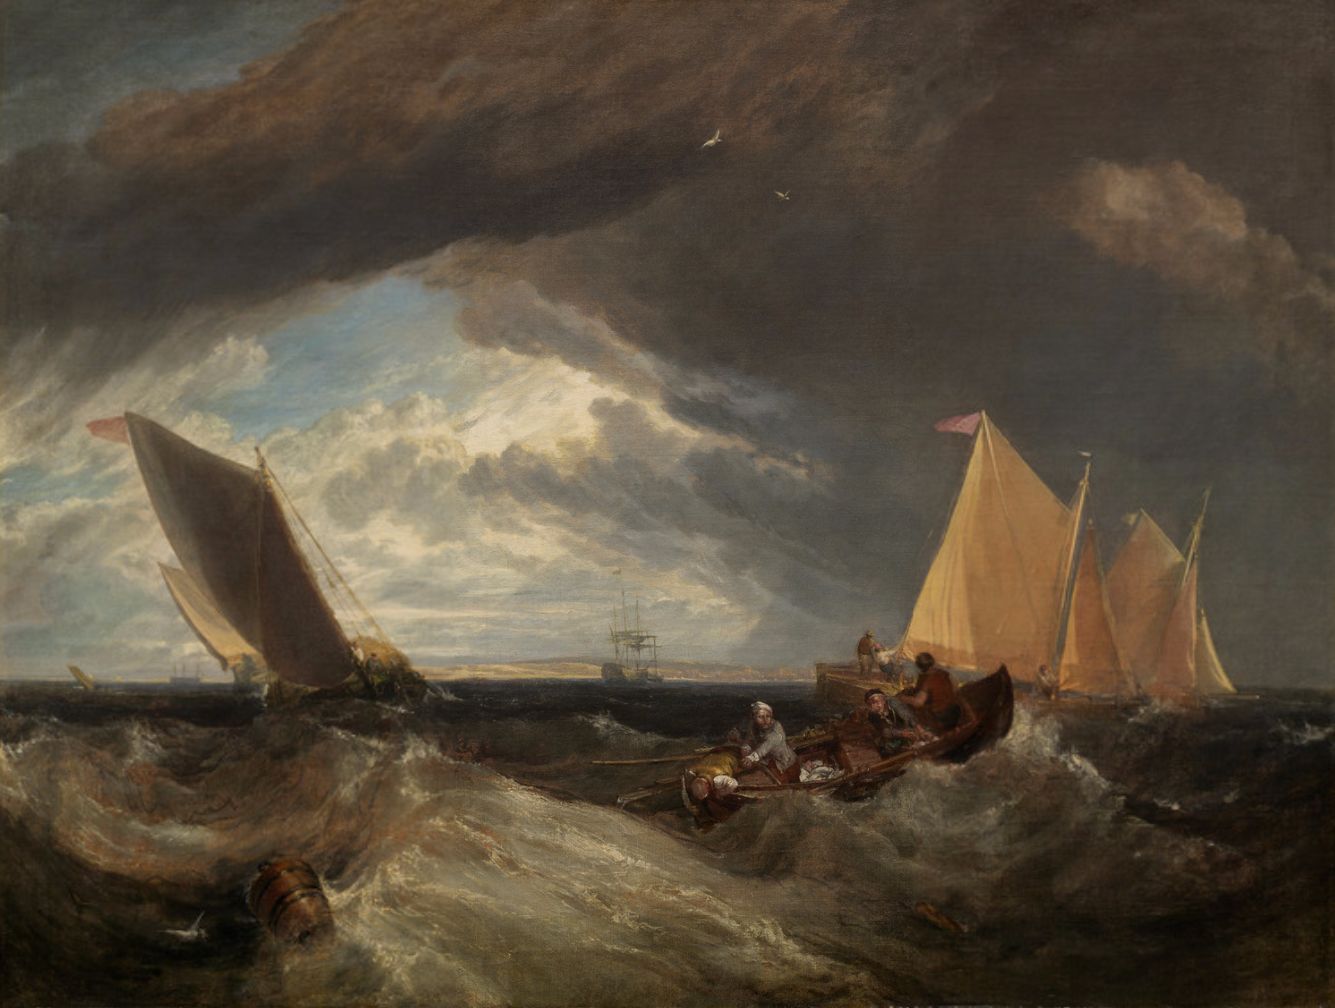 William+Turner-1775-1851 (38).jpg